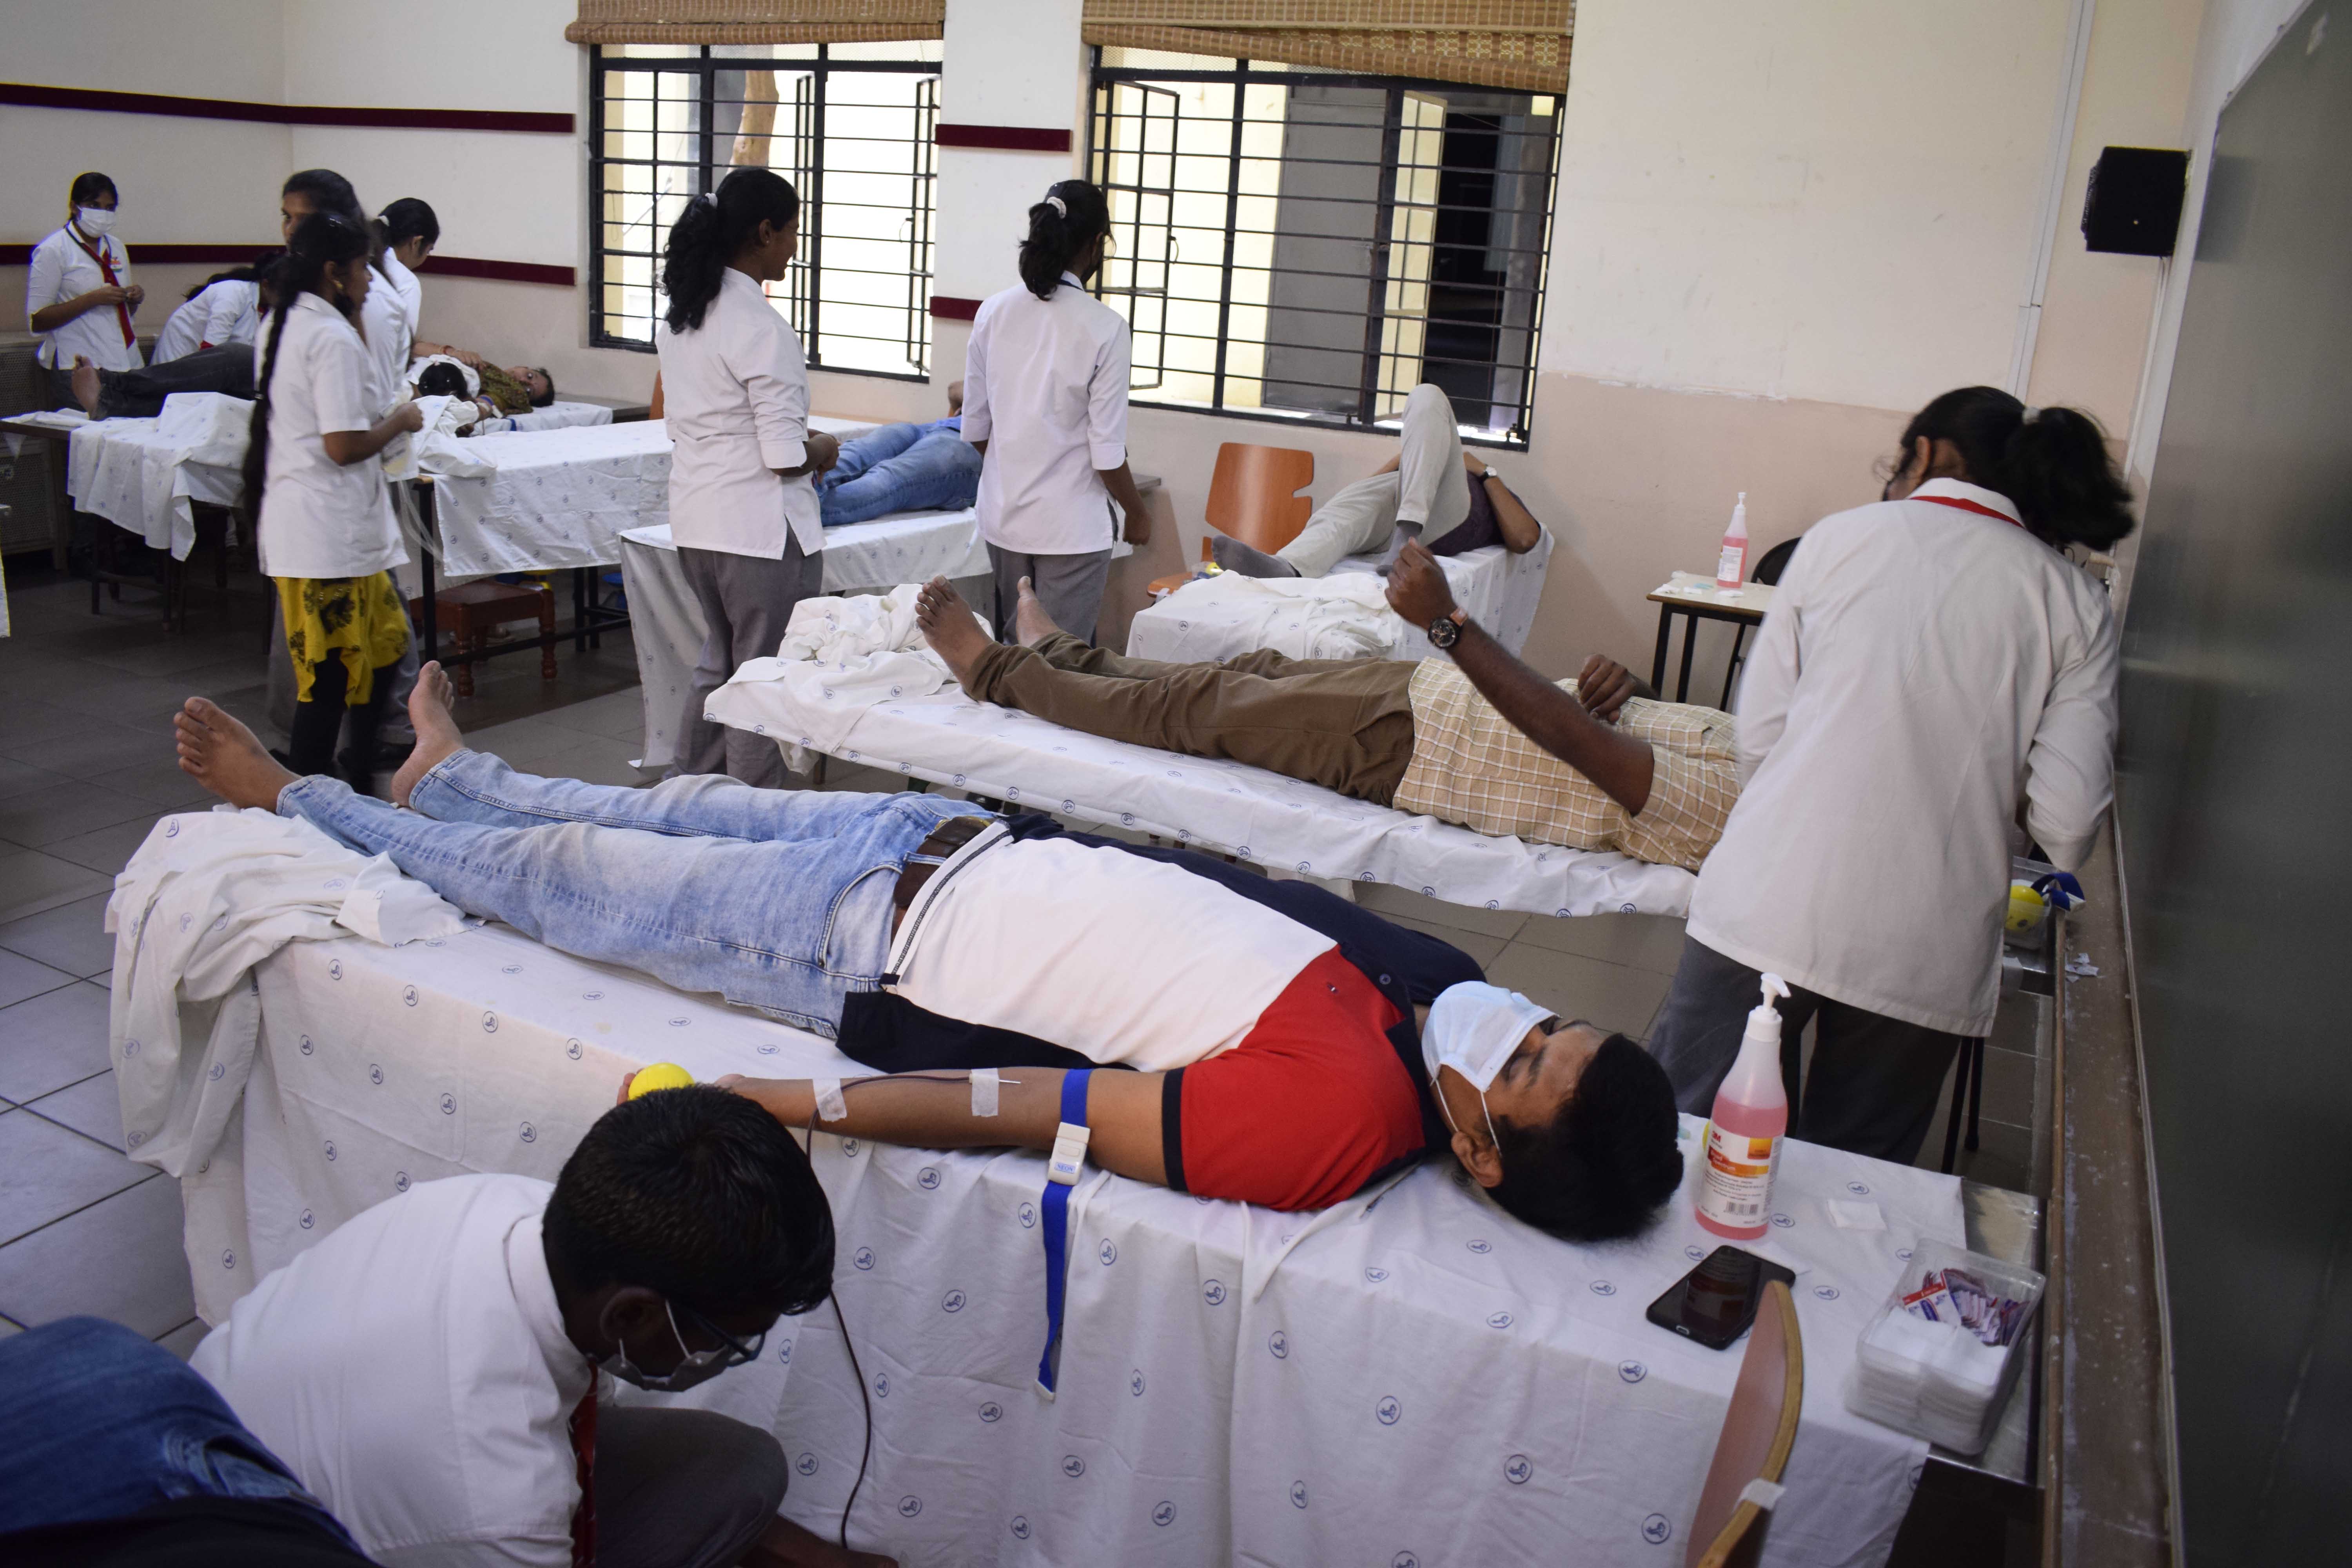 The Ganga Hospitals Coimbatore joined Yuvabharathi to conduct Blood donation Camp